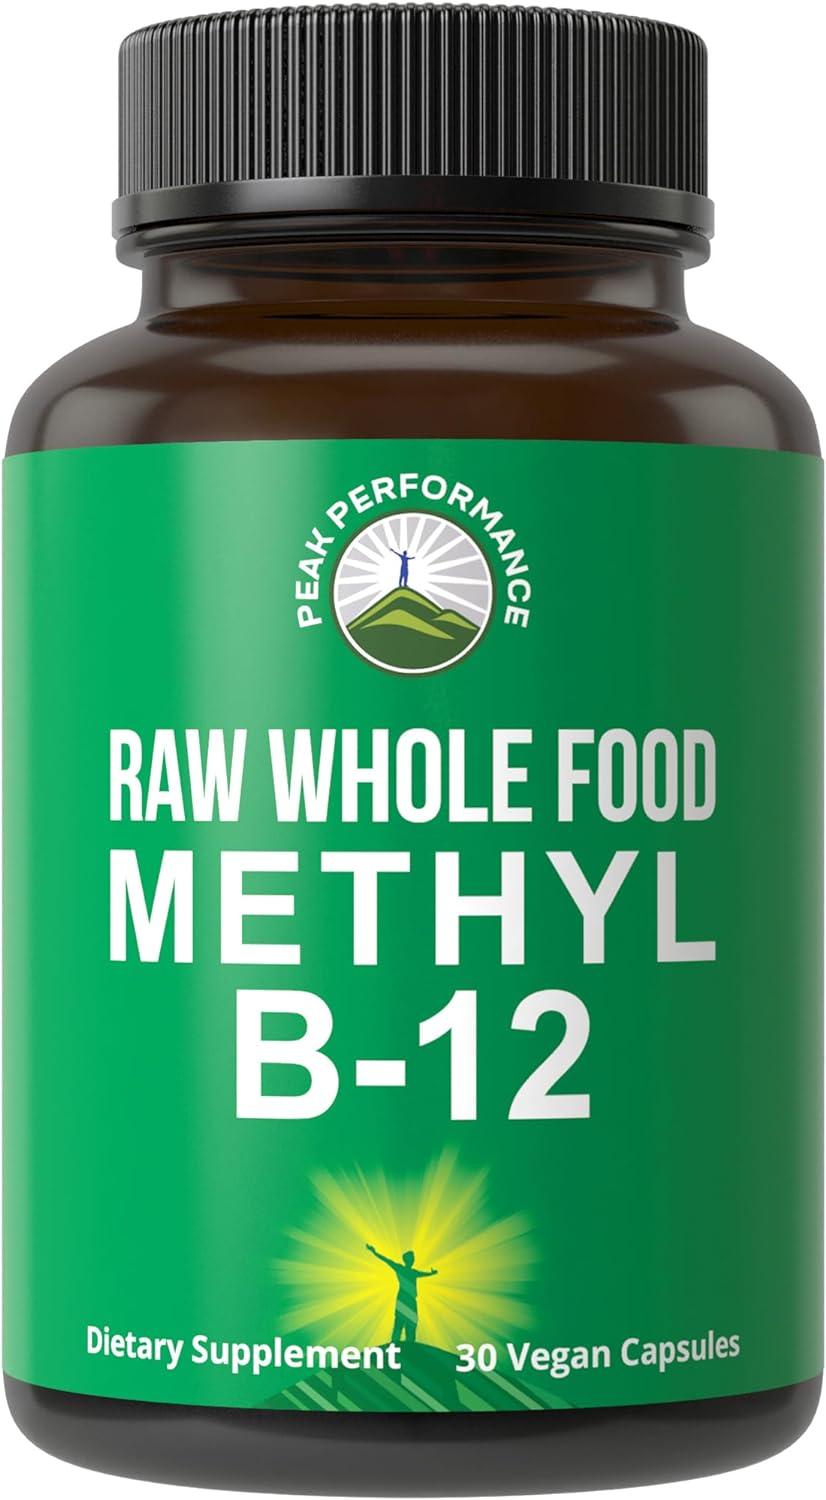 Peak Performance Raw Whole Food Vegan B12 Vitamin. Vitamin B12 Methylcobalamin - Methyl B-12 Supplement Plus 25+ Fruit and Vegetable Ingredients. 30 Day Supply Capsules